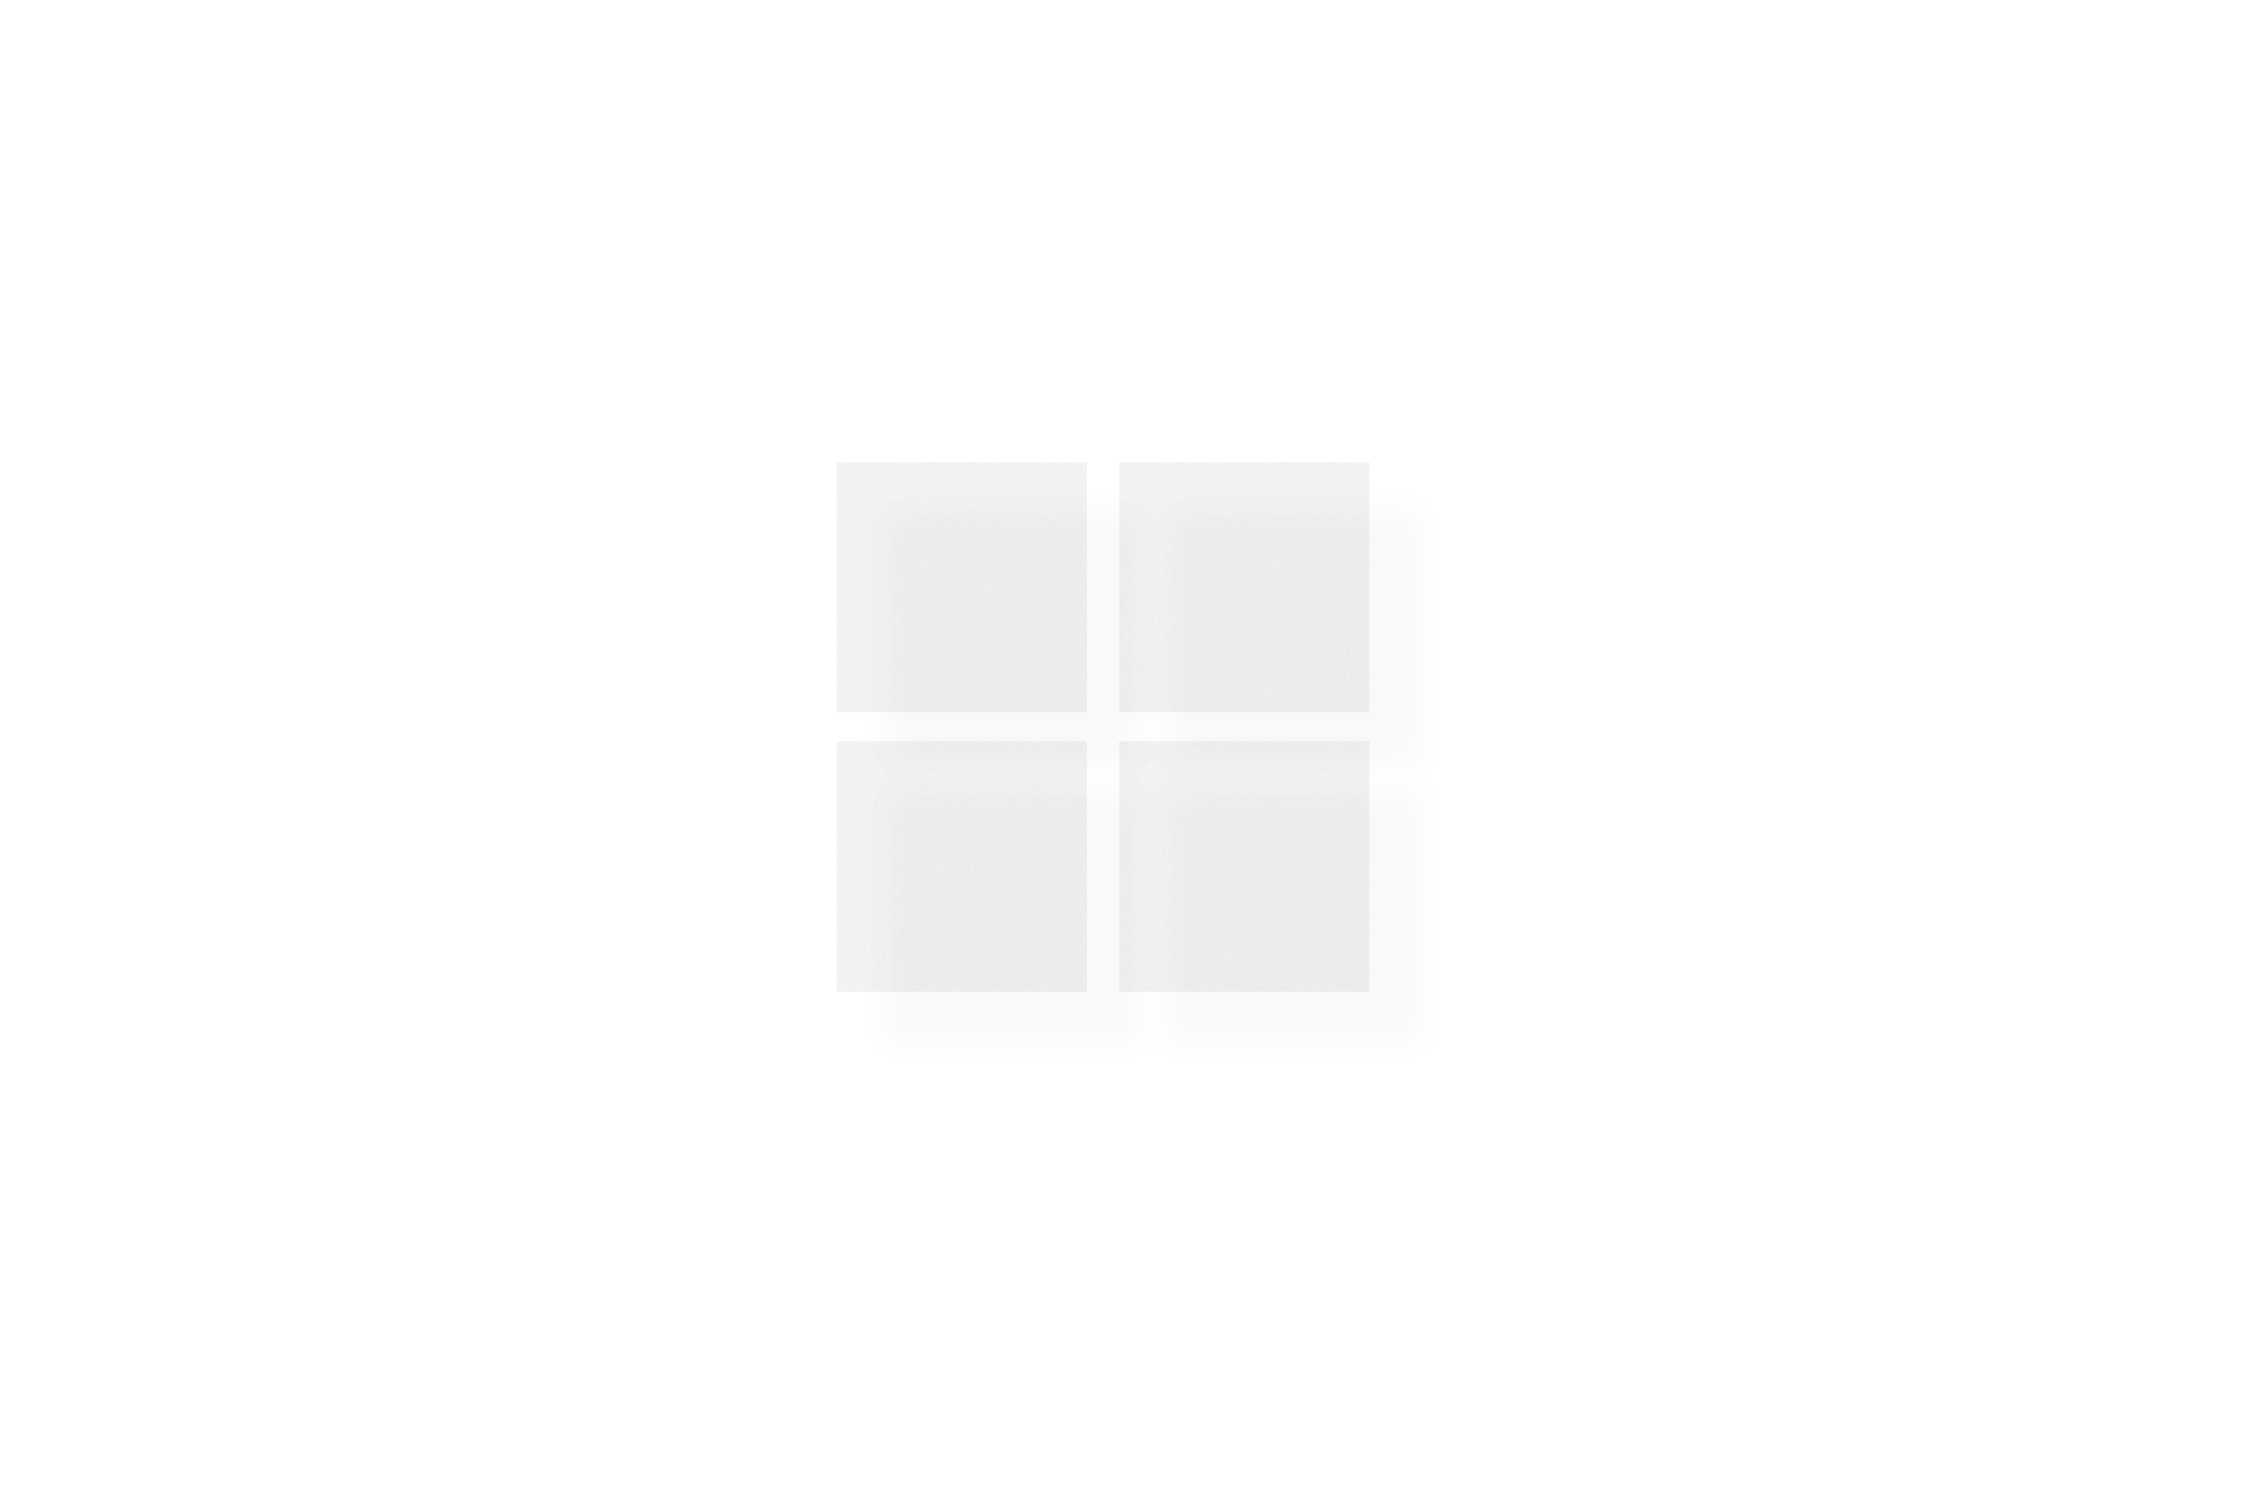 General 2256x1504 white Windows 10 Microsoft minimalism operating system digital art Microsoft Windows logo simple background